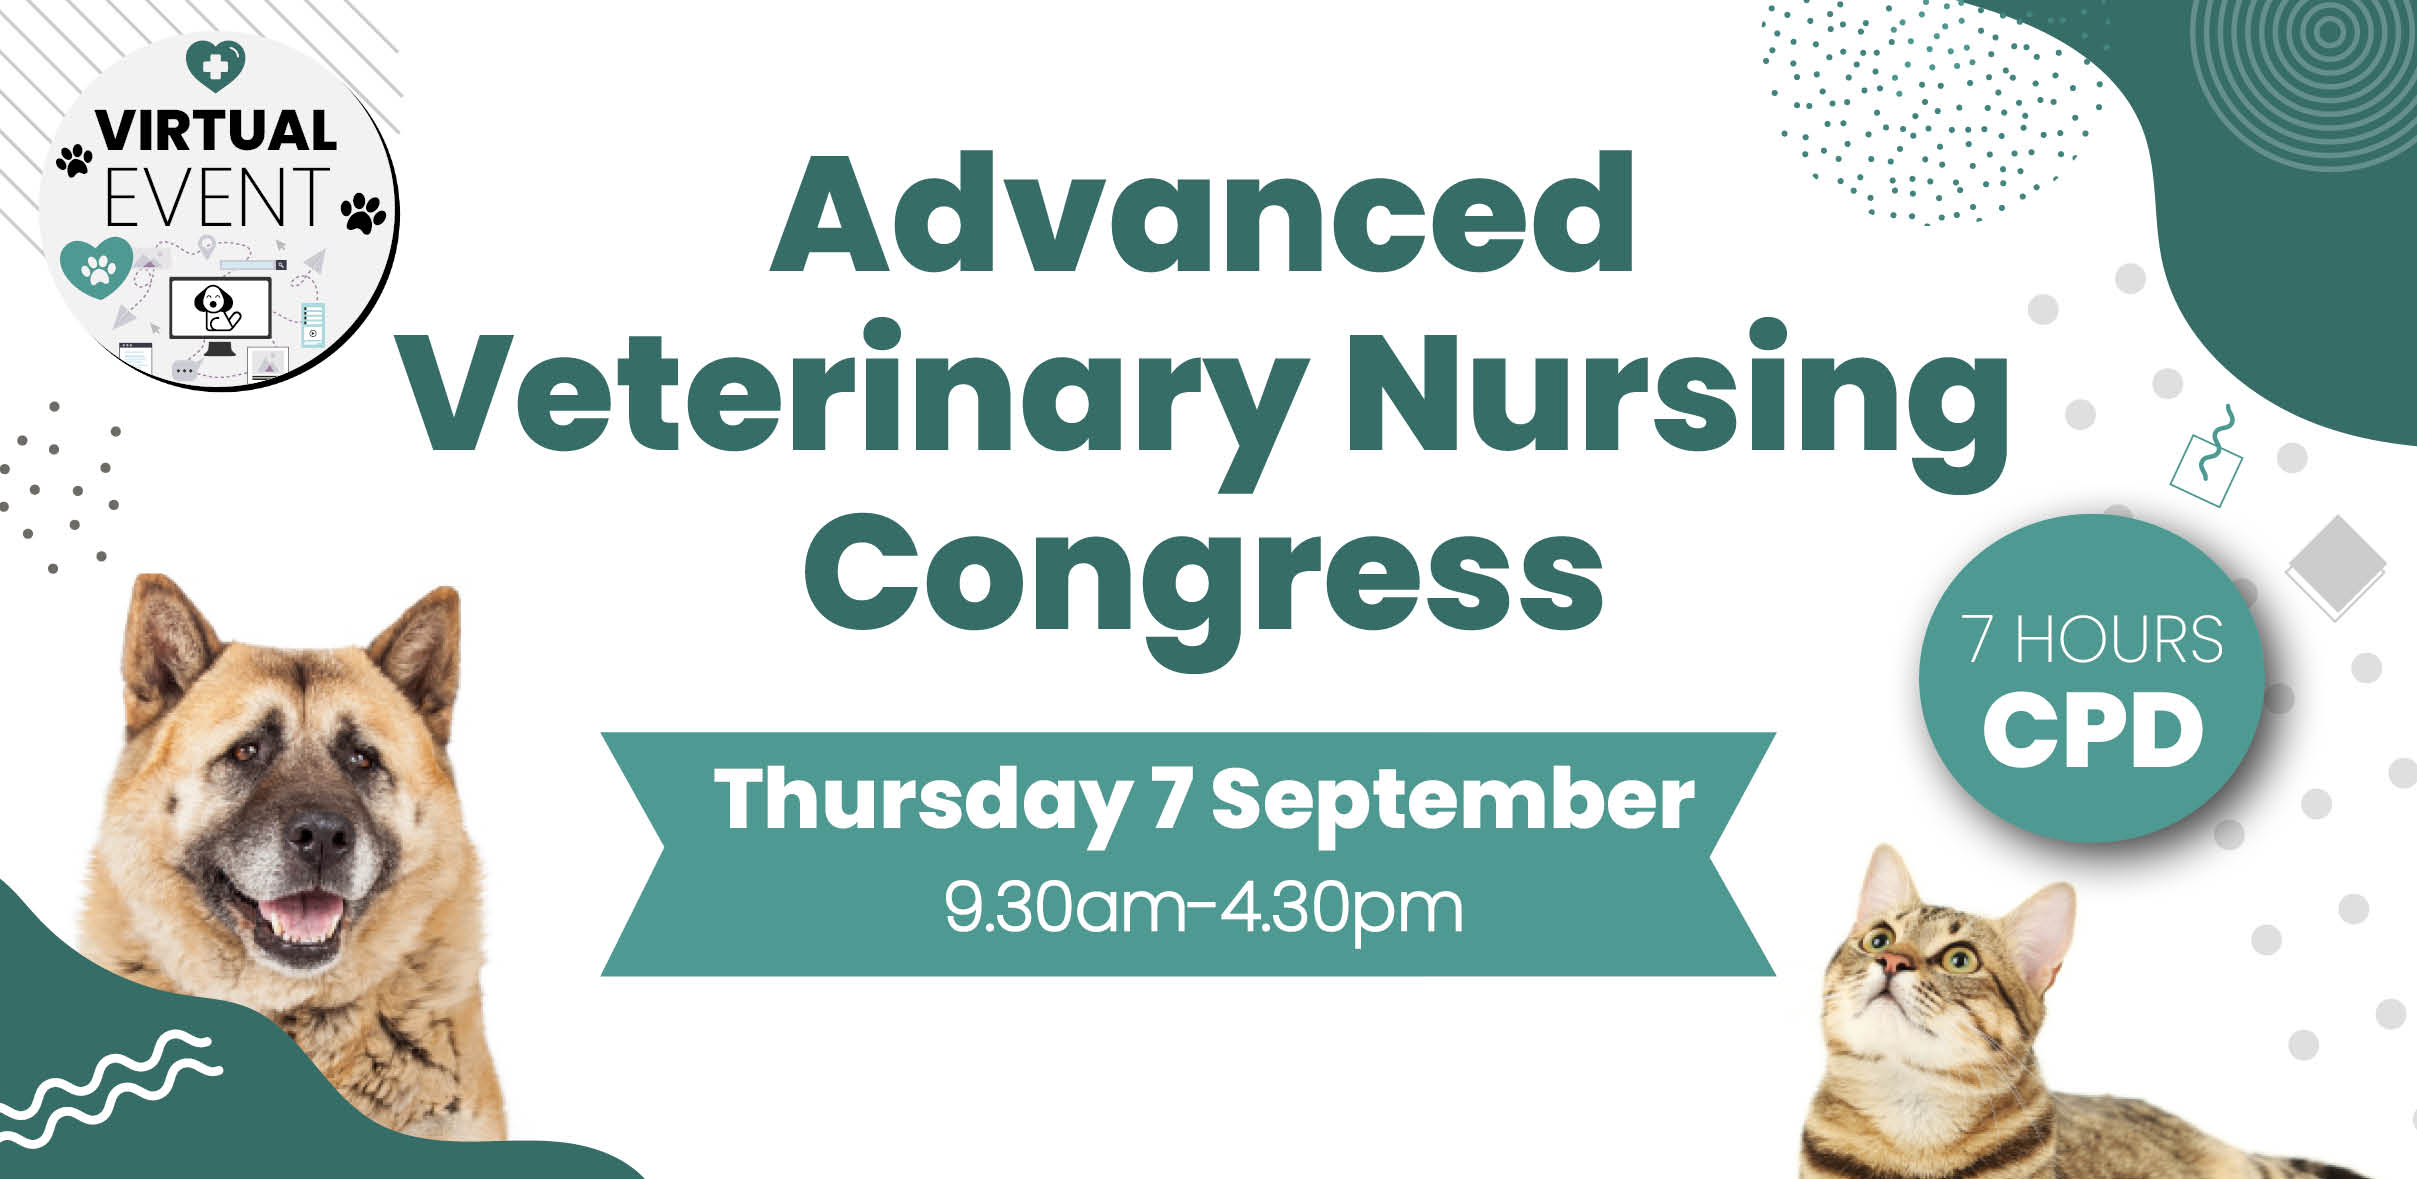 Advanced Veterinary Nursing Congress - CPD Event